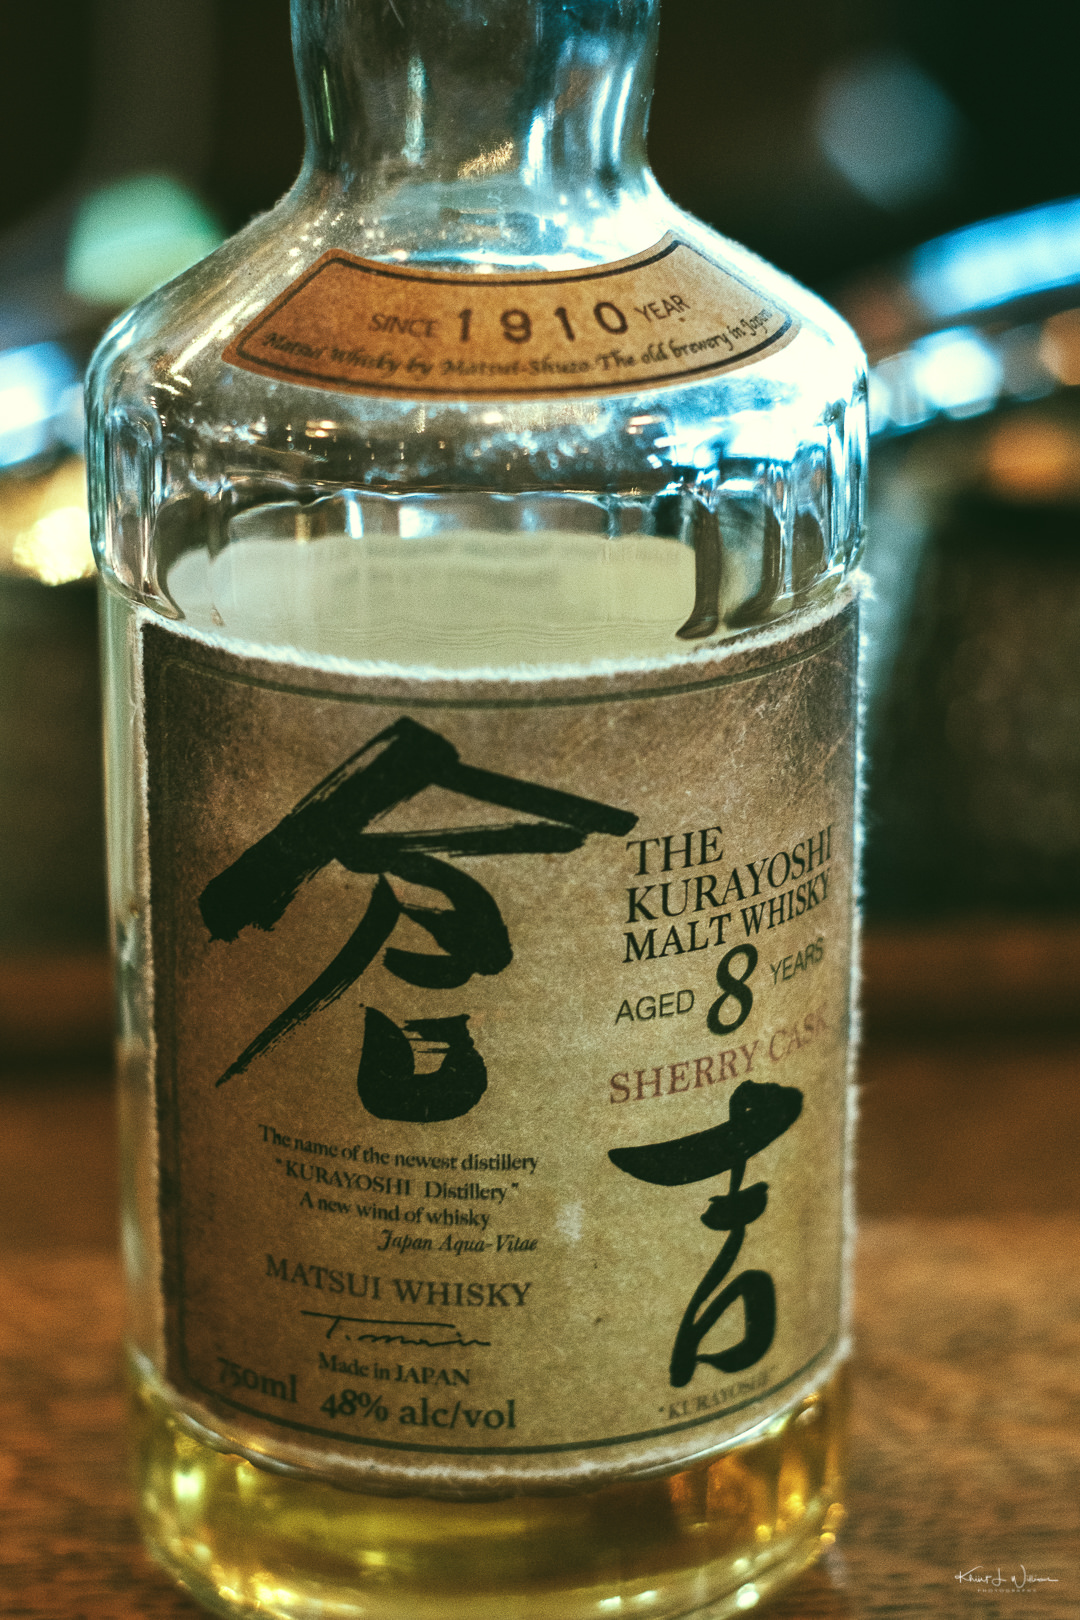 The Kurayoshi Malt Whisky